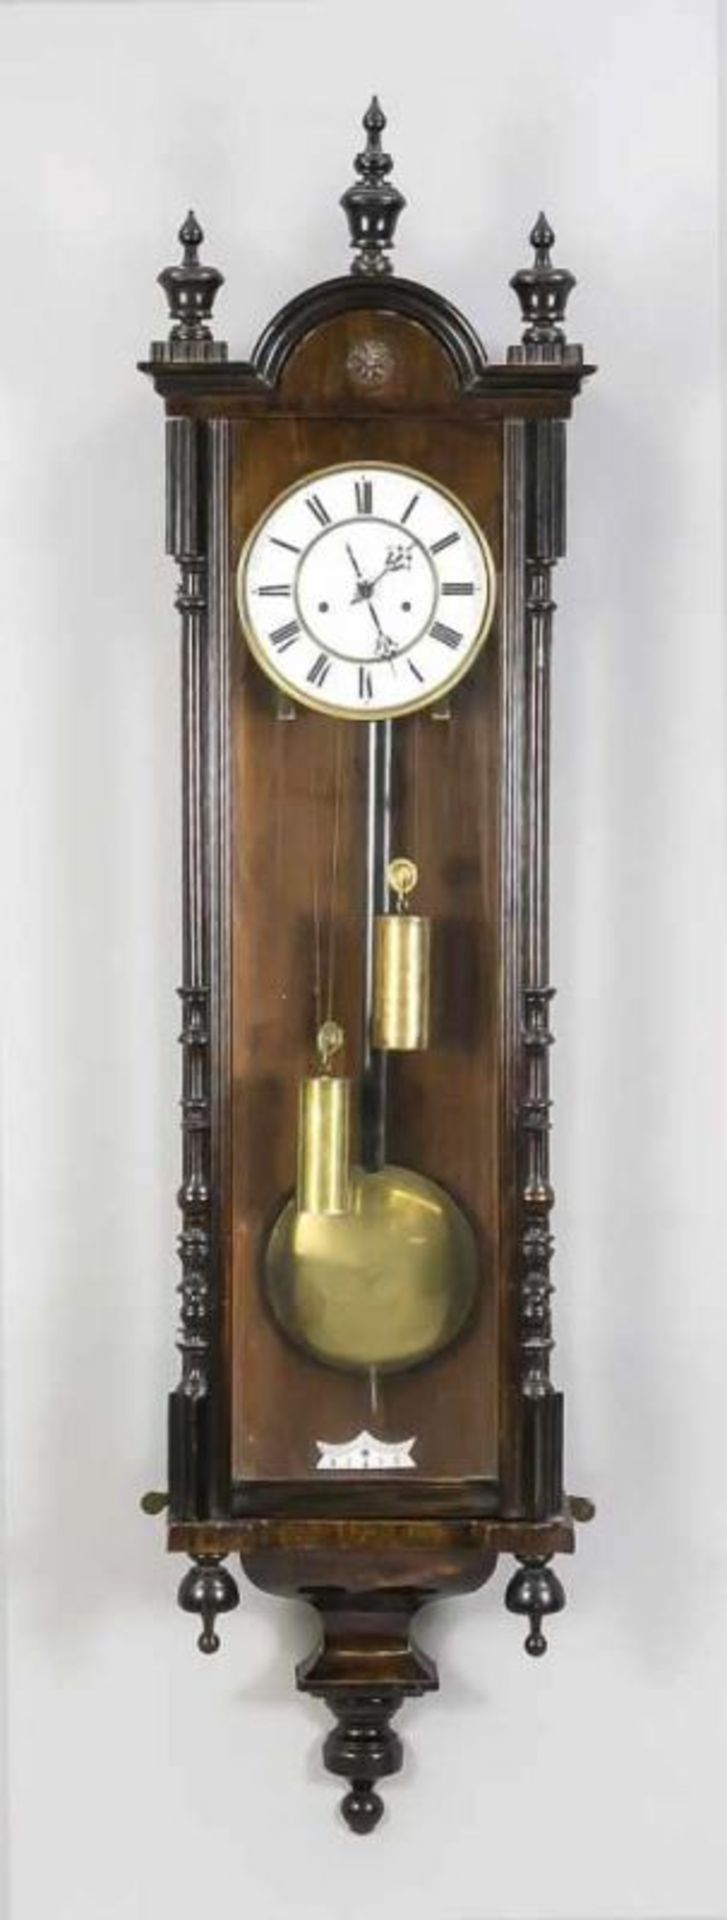 Two-weight regulator having dark closet, partially geeboniseerd (trim). Enamel dial with Roman